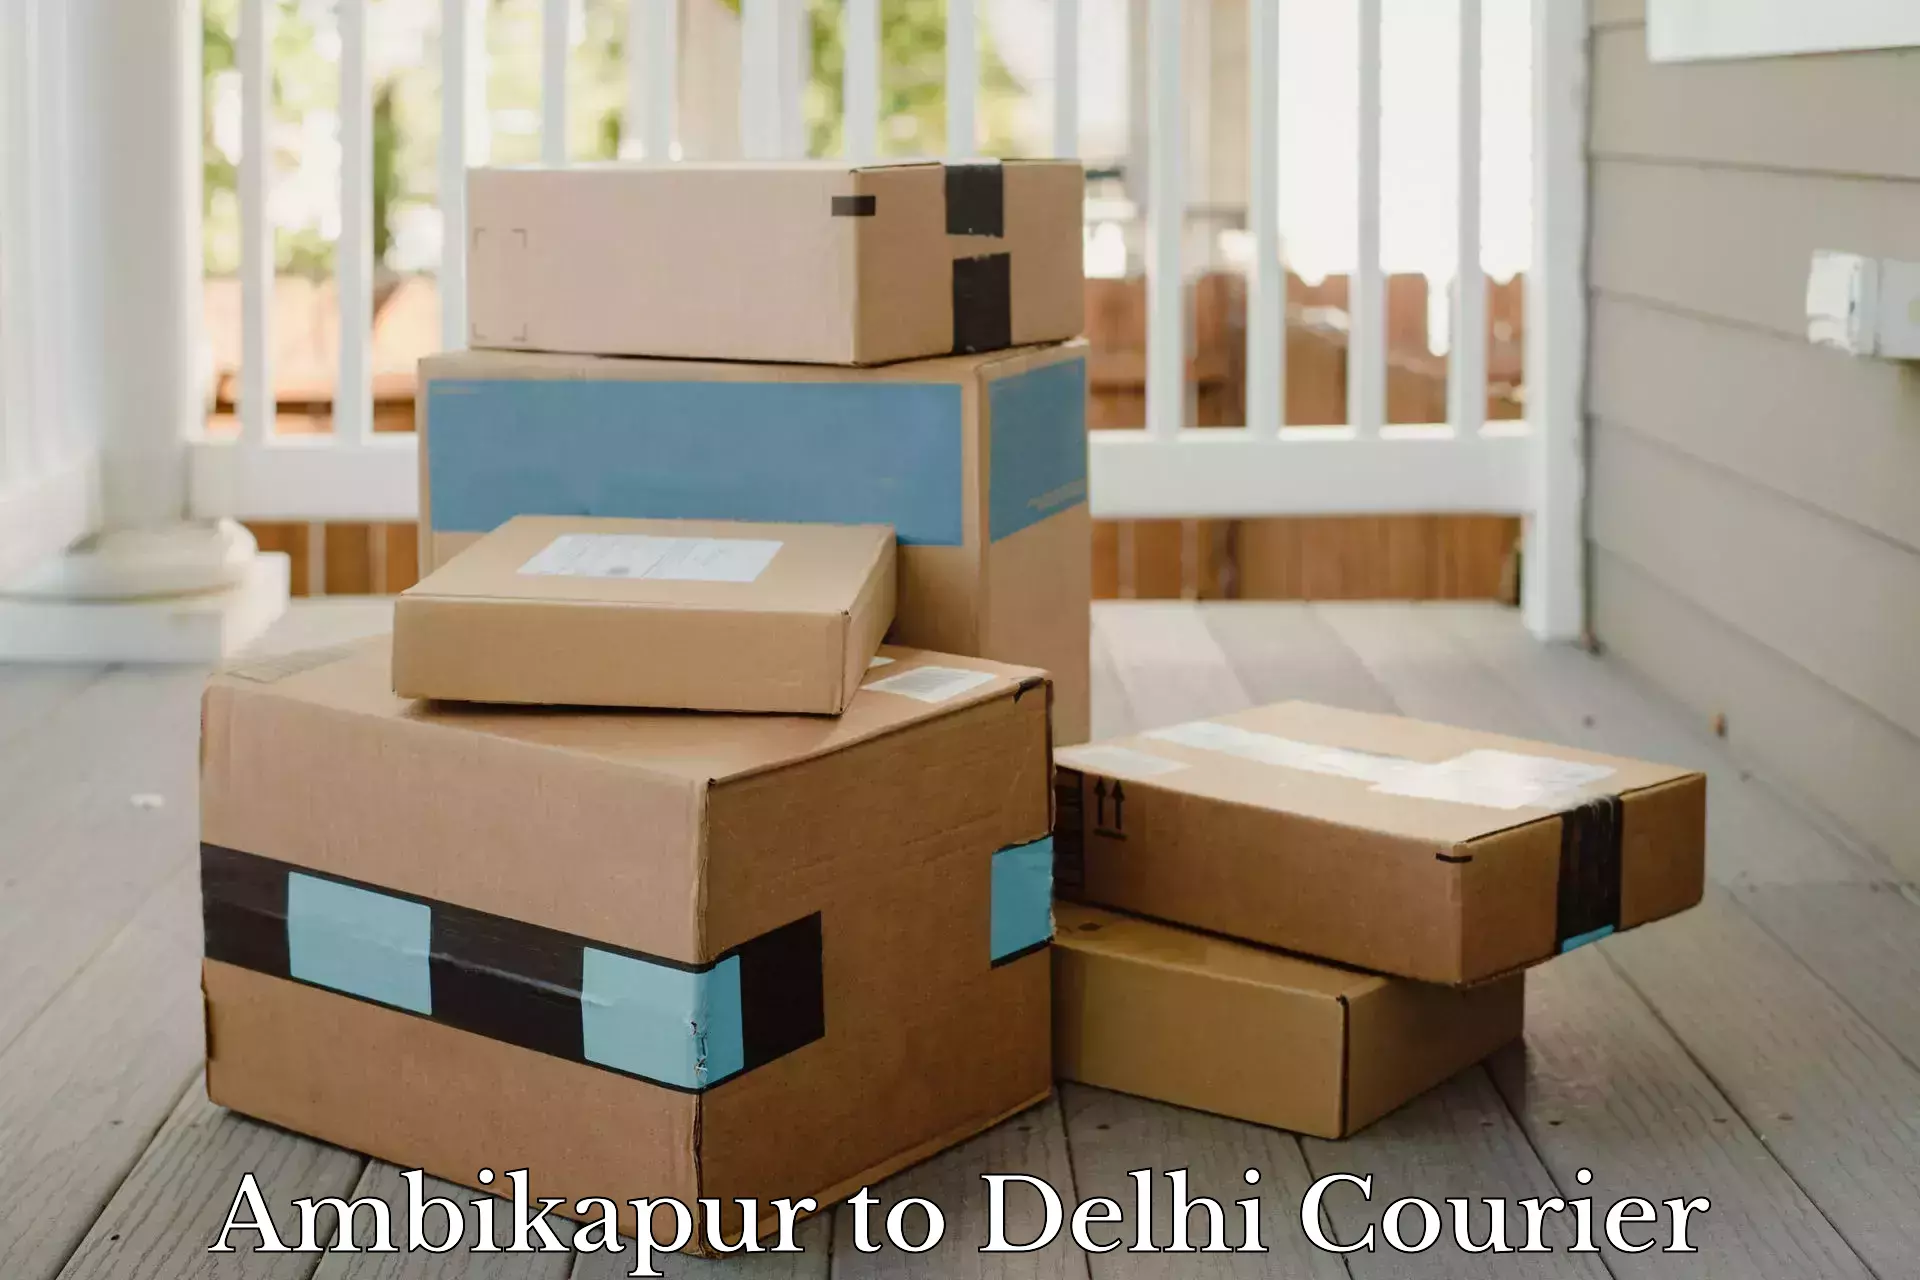 Parcel service for businesses Ambikapur to Delhi